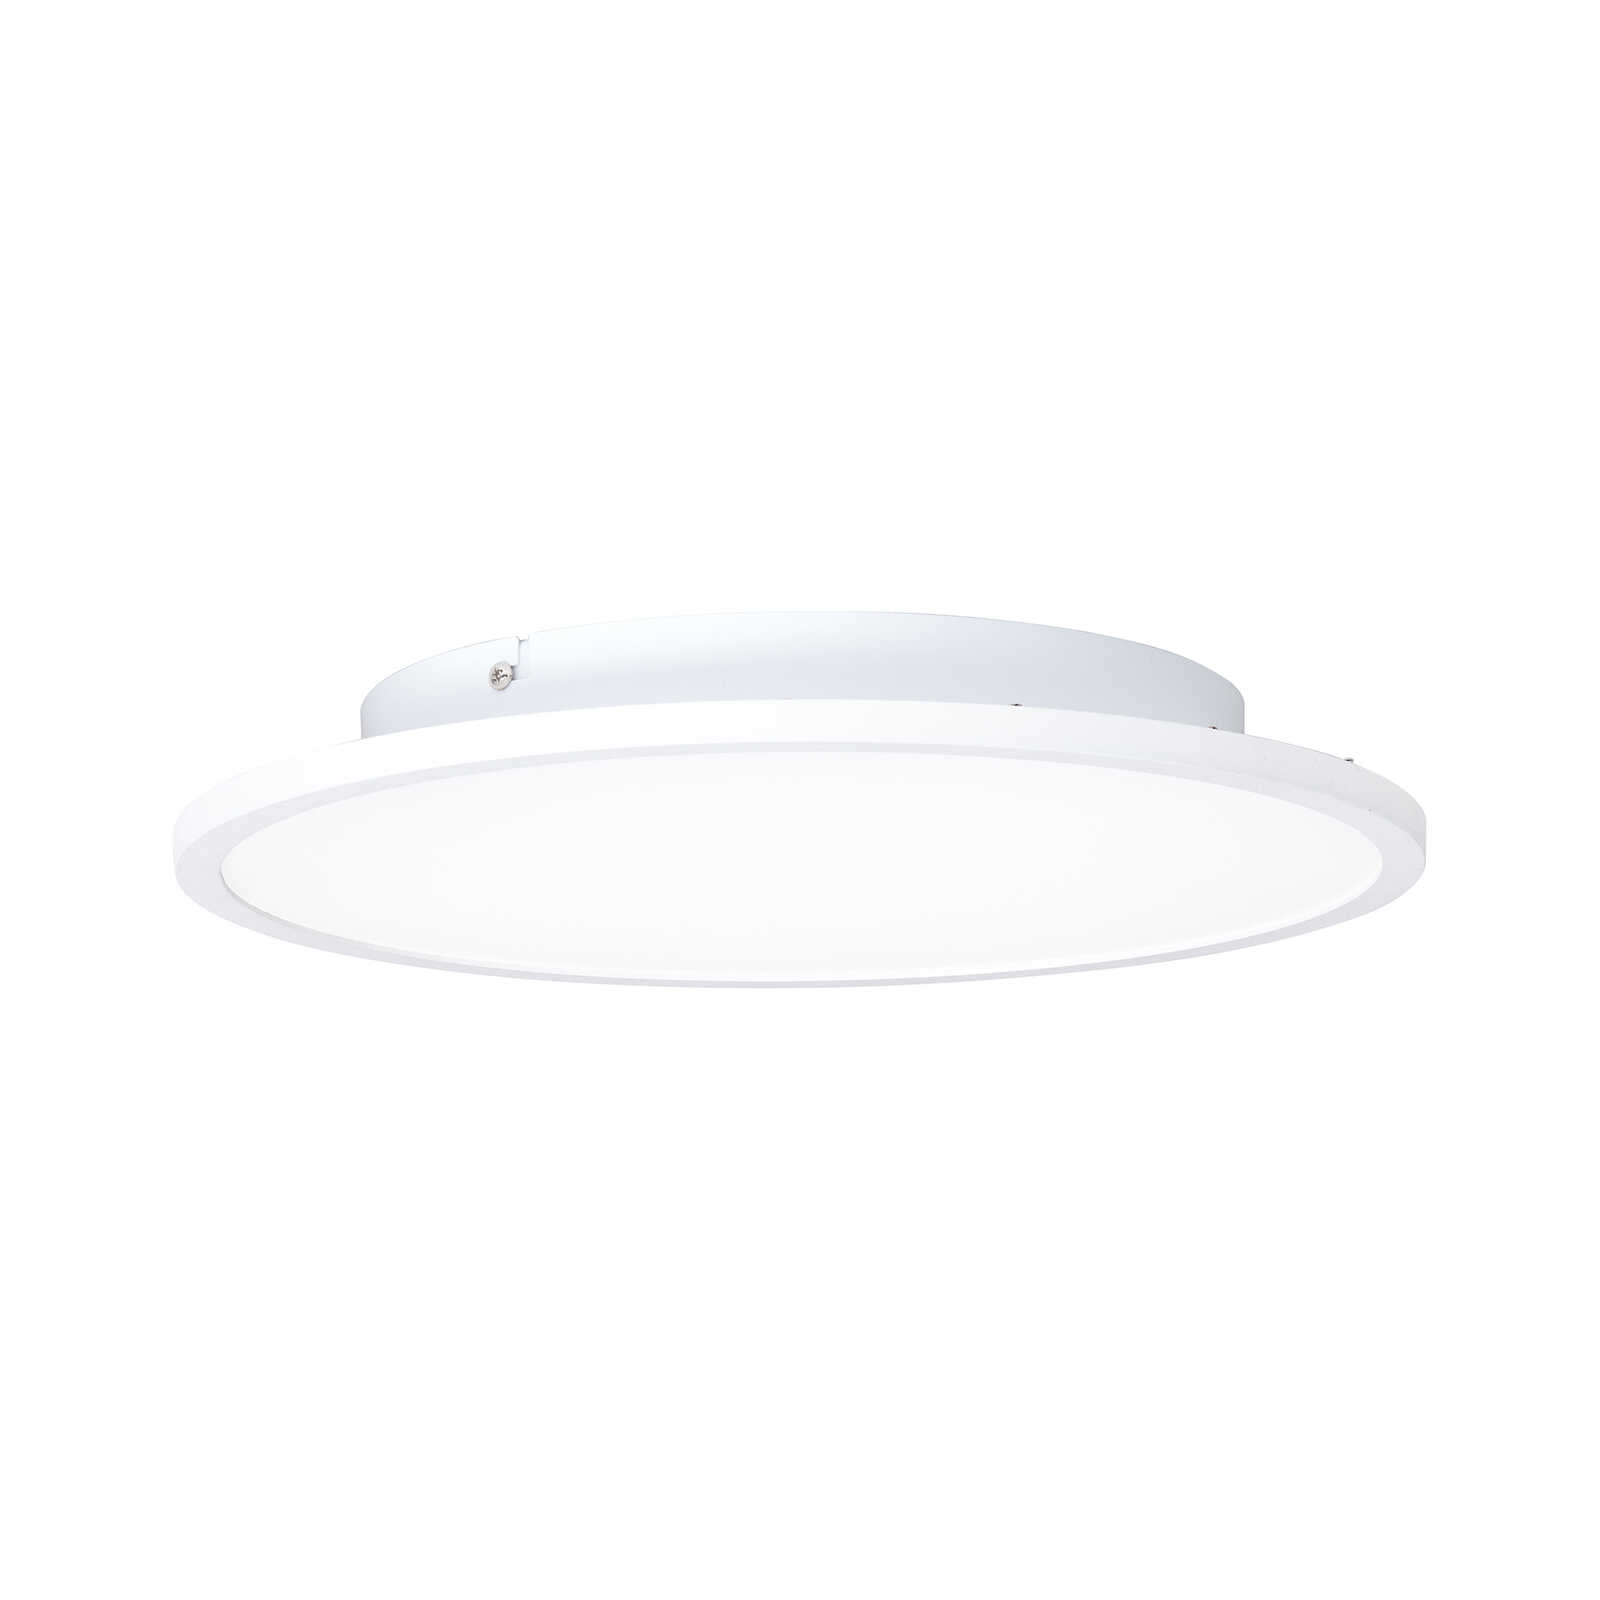 Plastic ceiling light - Constantin 5 - White
